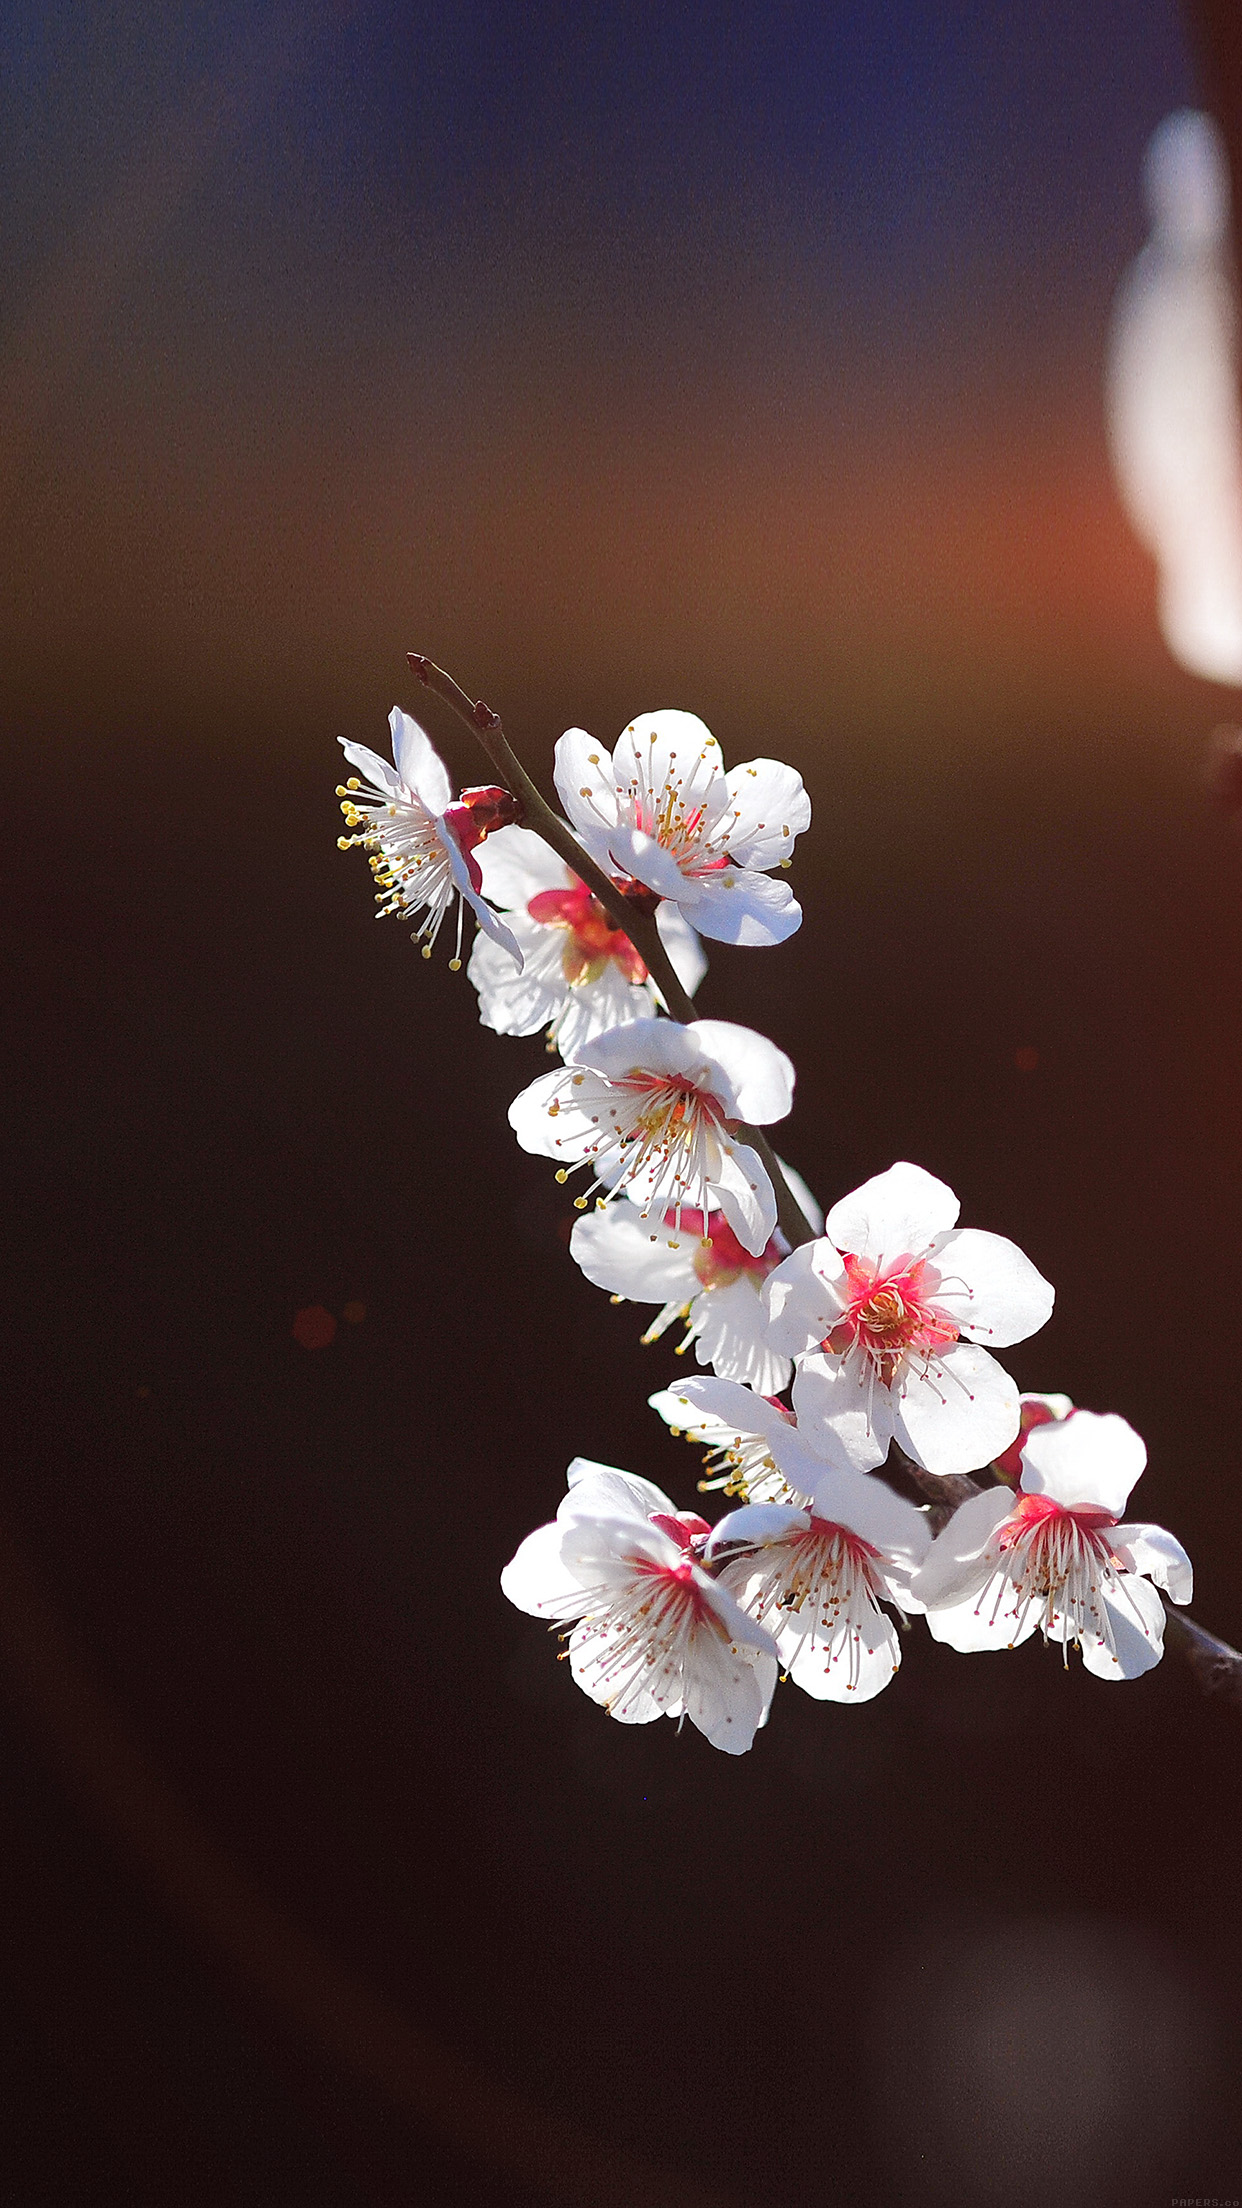 sakura wallpaper iphone,flower,blossom,cherry blossom,spring,plant